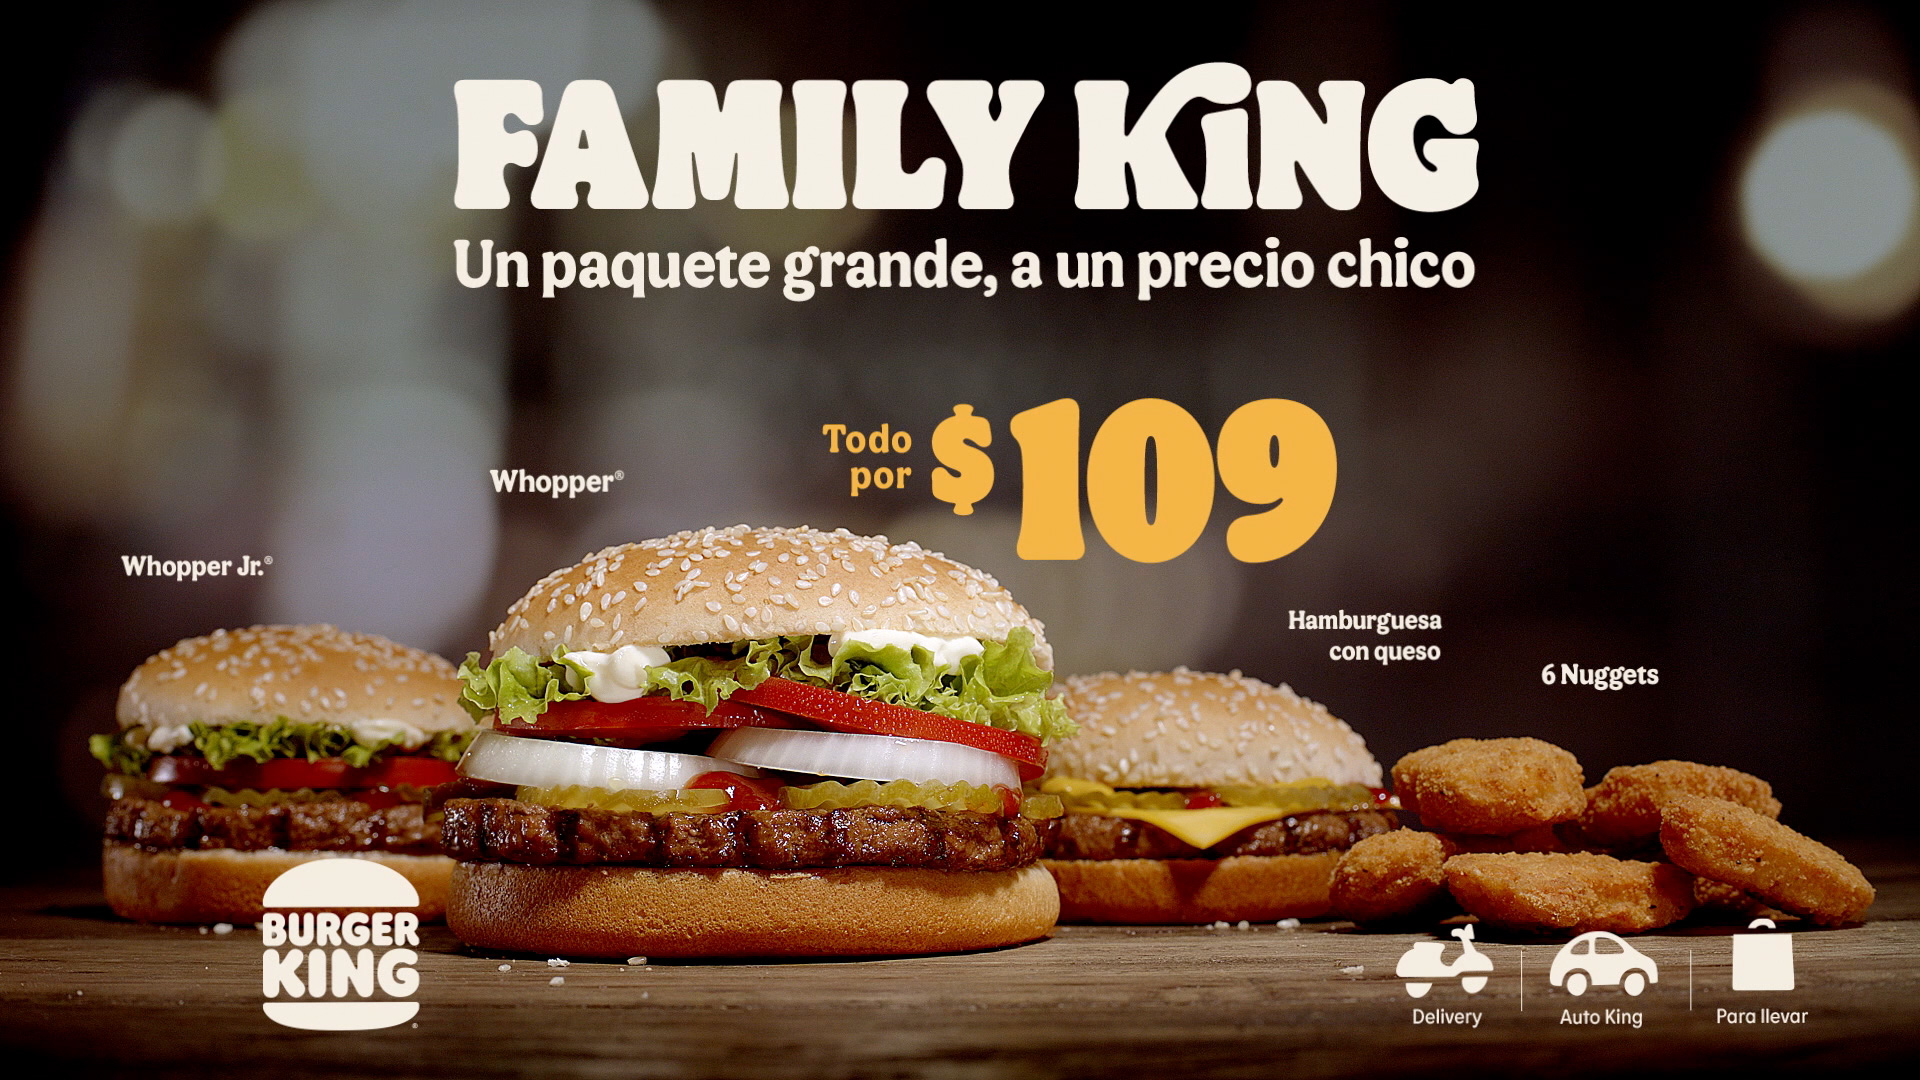 BURGER KING – FAMILY KING